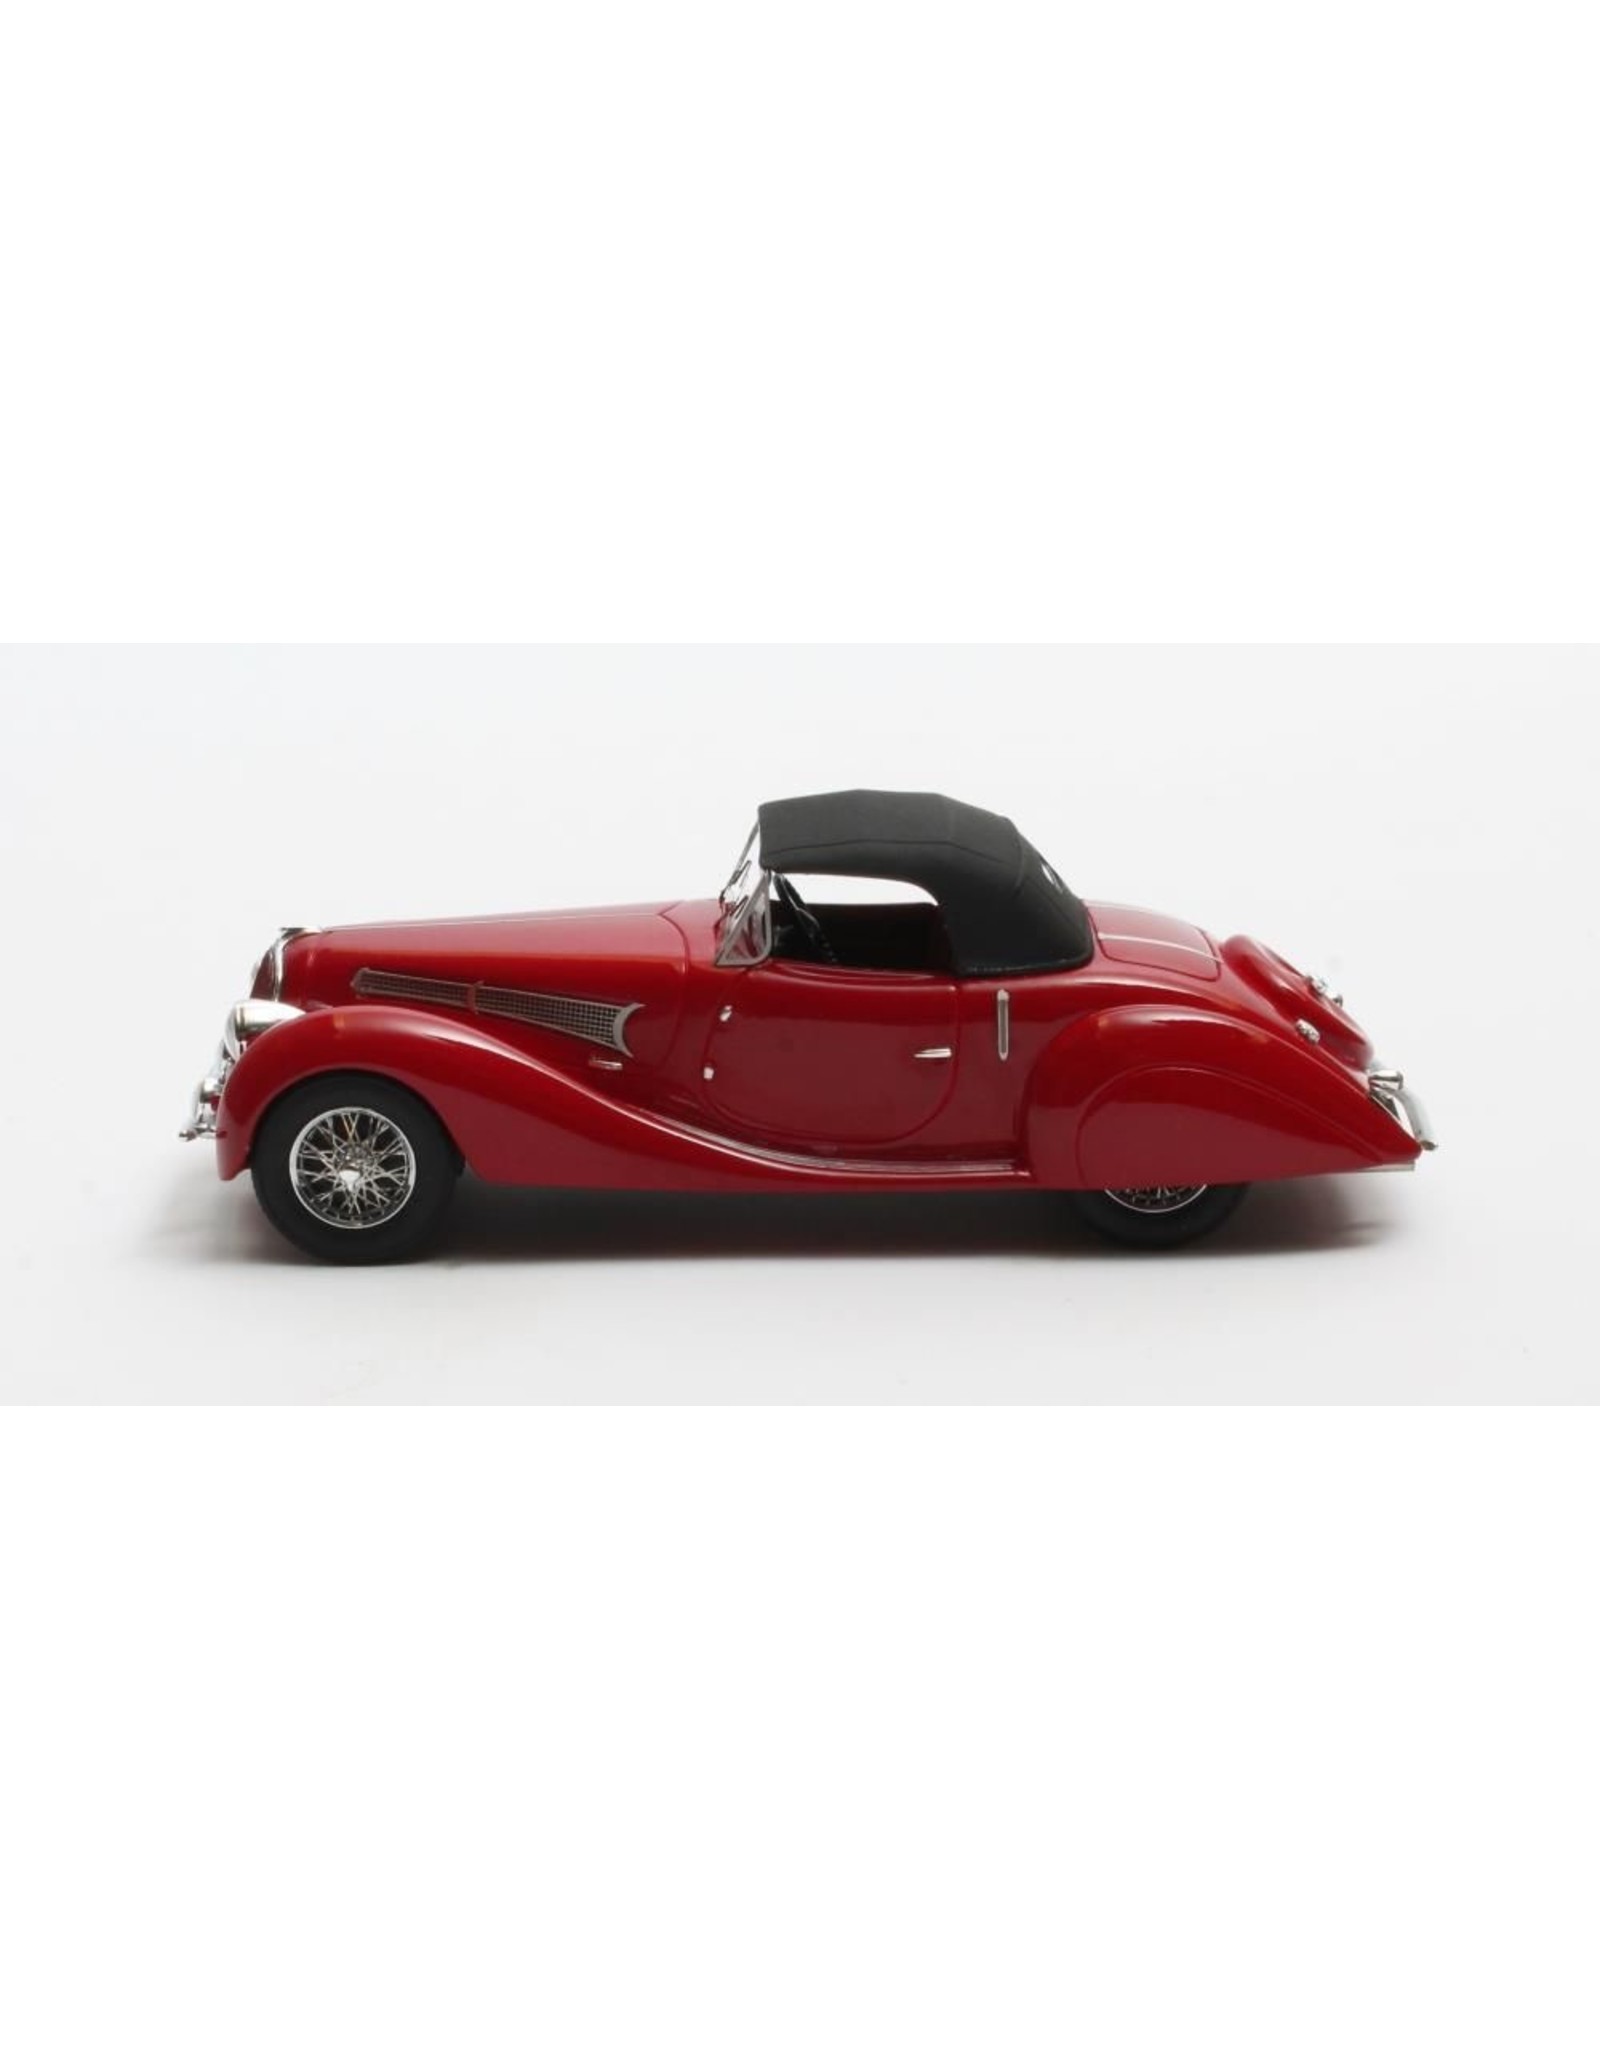 Delahaye by Figoni & Falaschi Delahaye 135 MS Grand Sports Roadster Figoni Falashi(closed)1939(red)